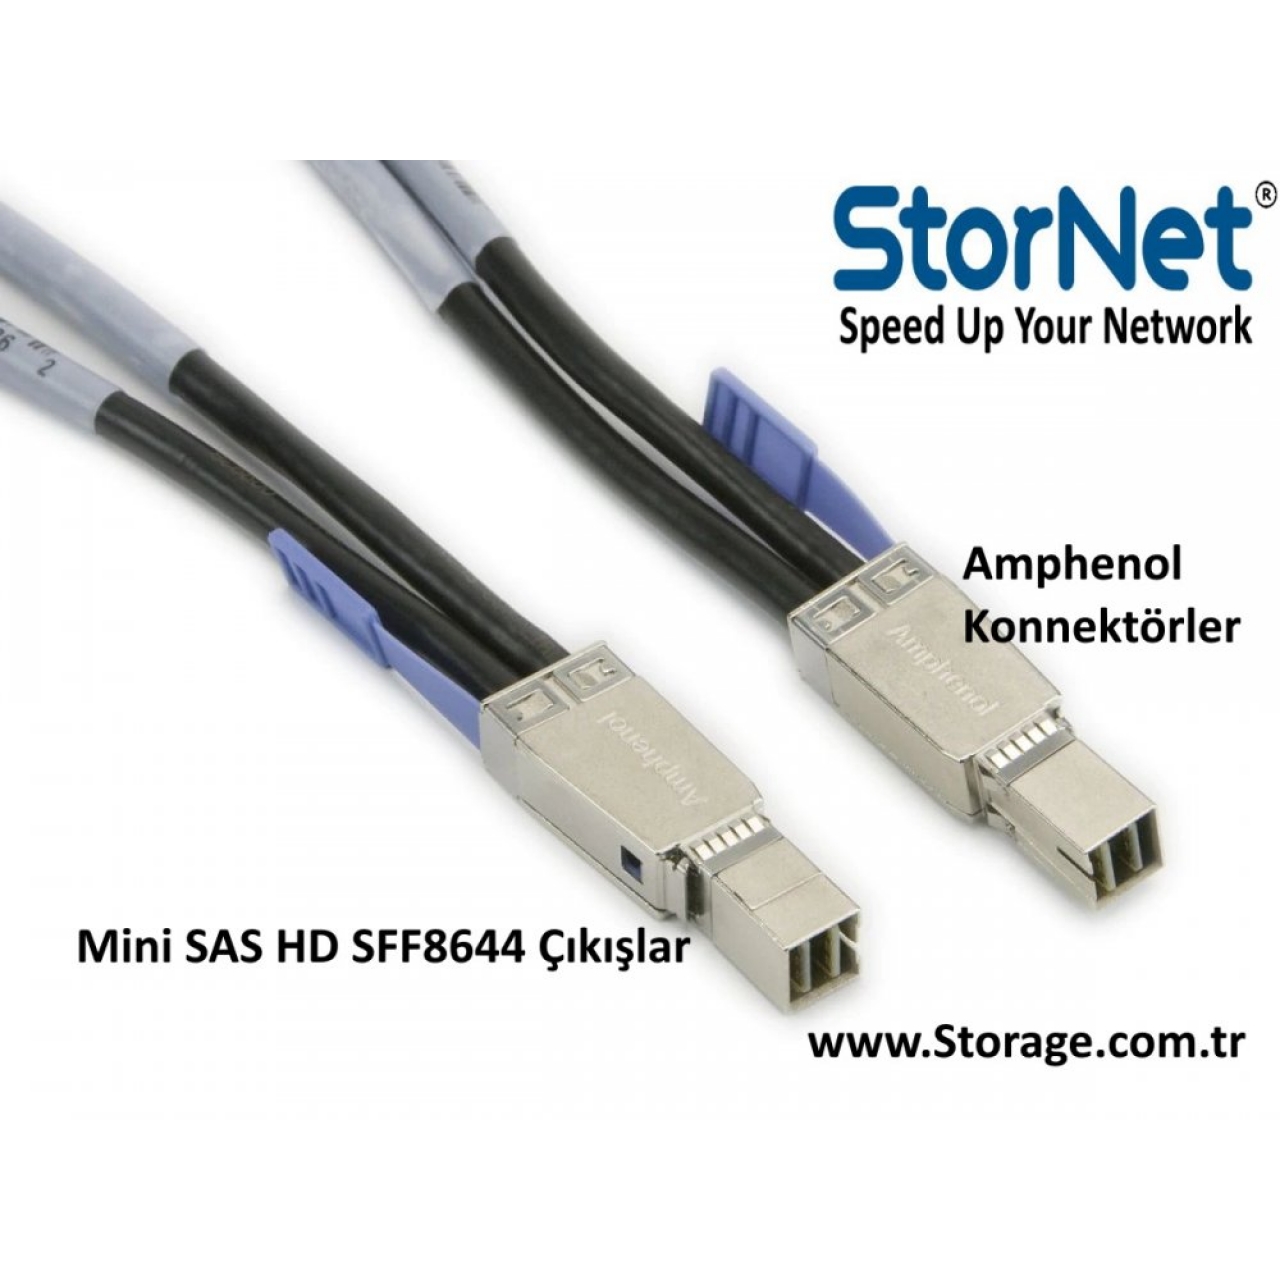 MiniSAS HD to External MiniSAS HD 3metre Kablo StorNET